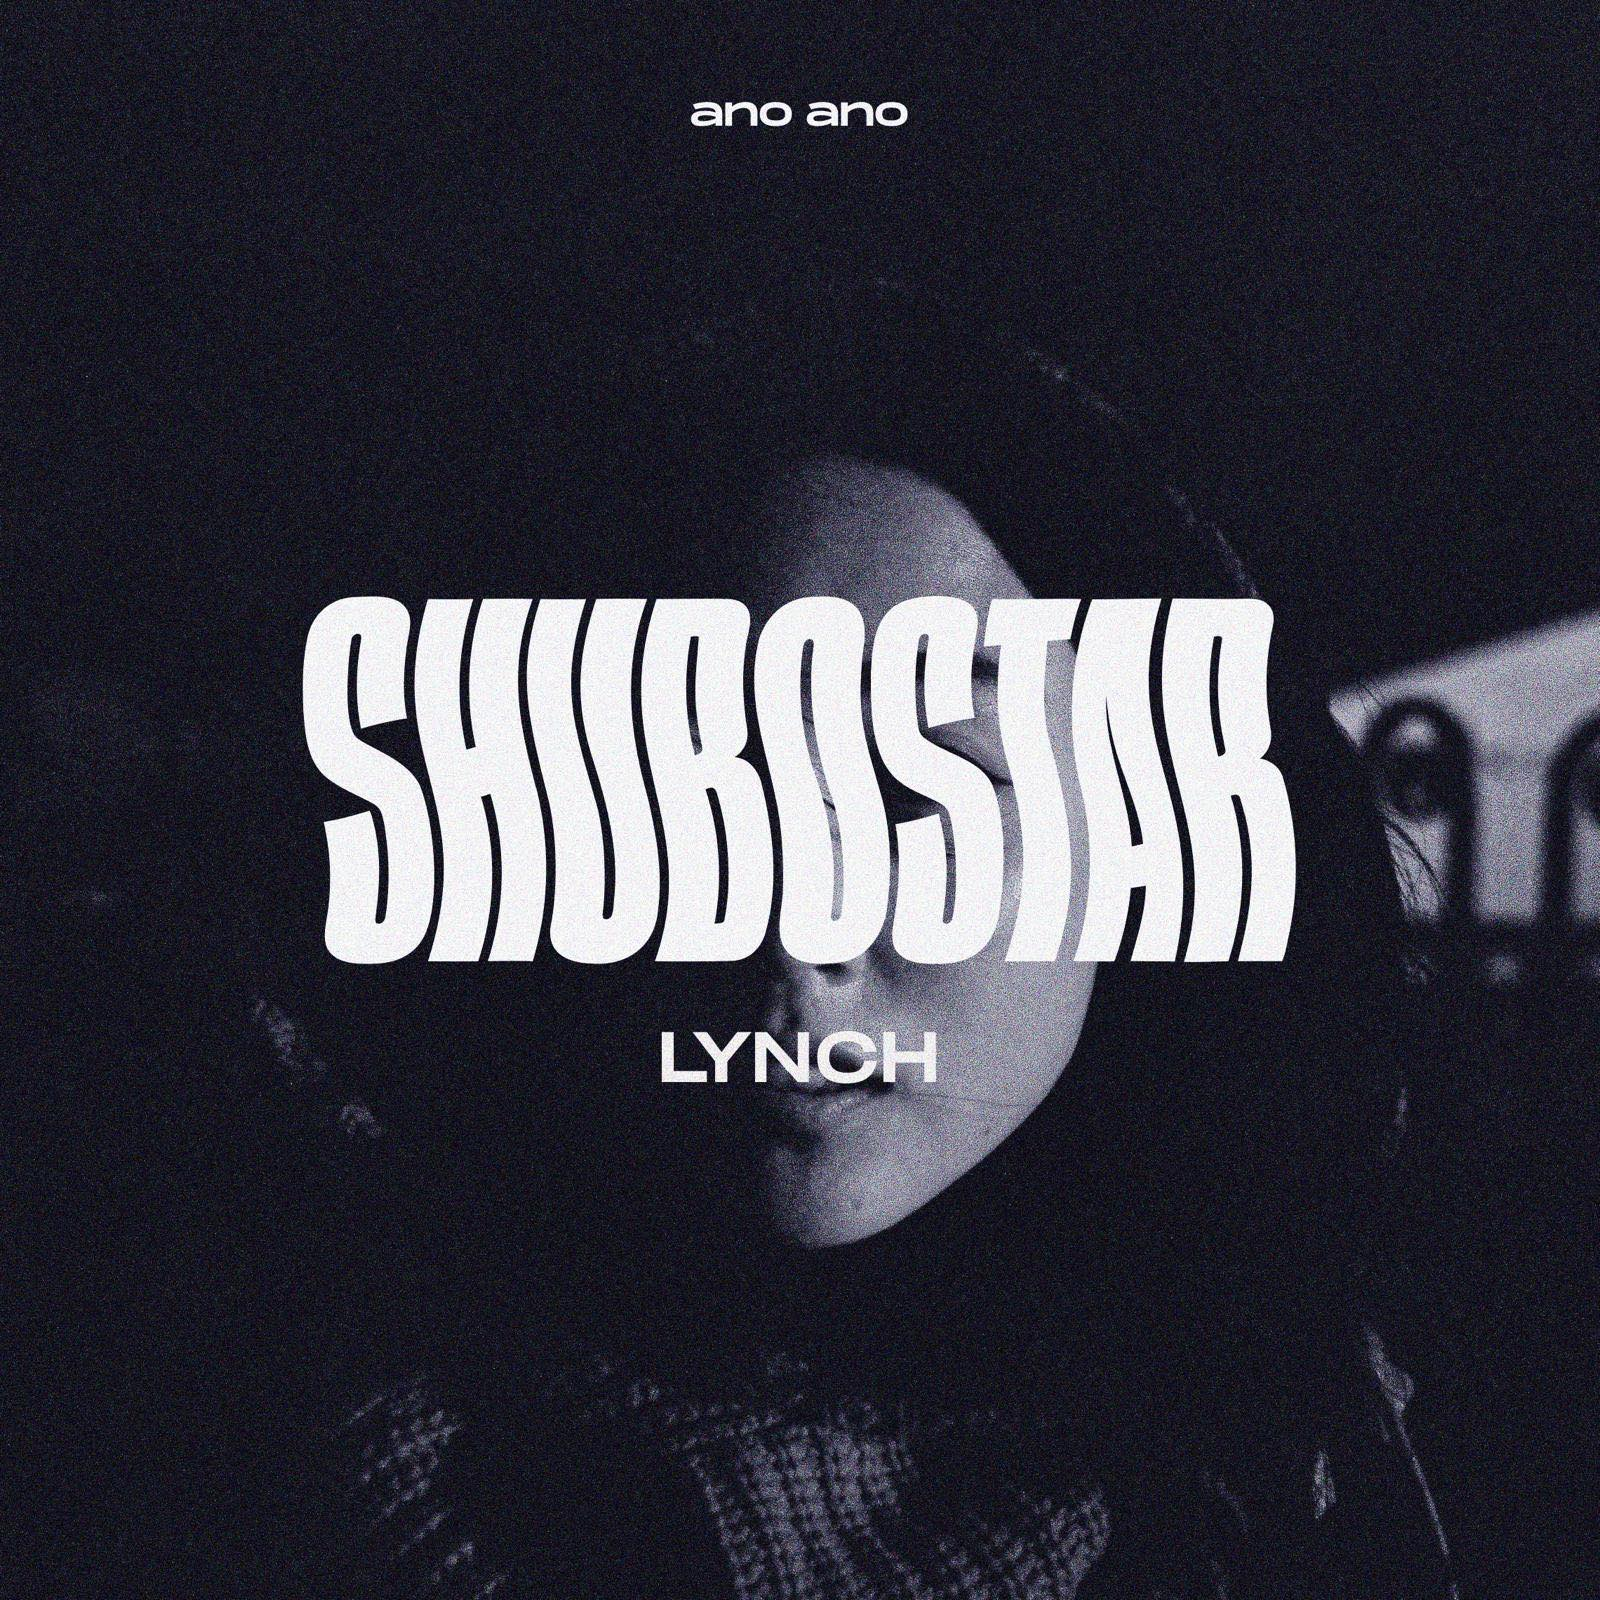 Shubostar Lynch EP - ANO ANO record label